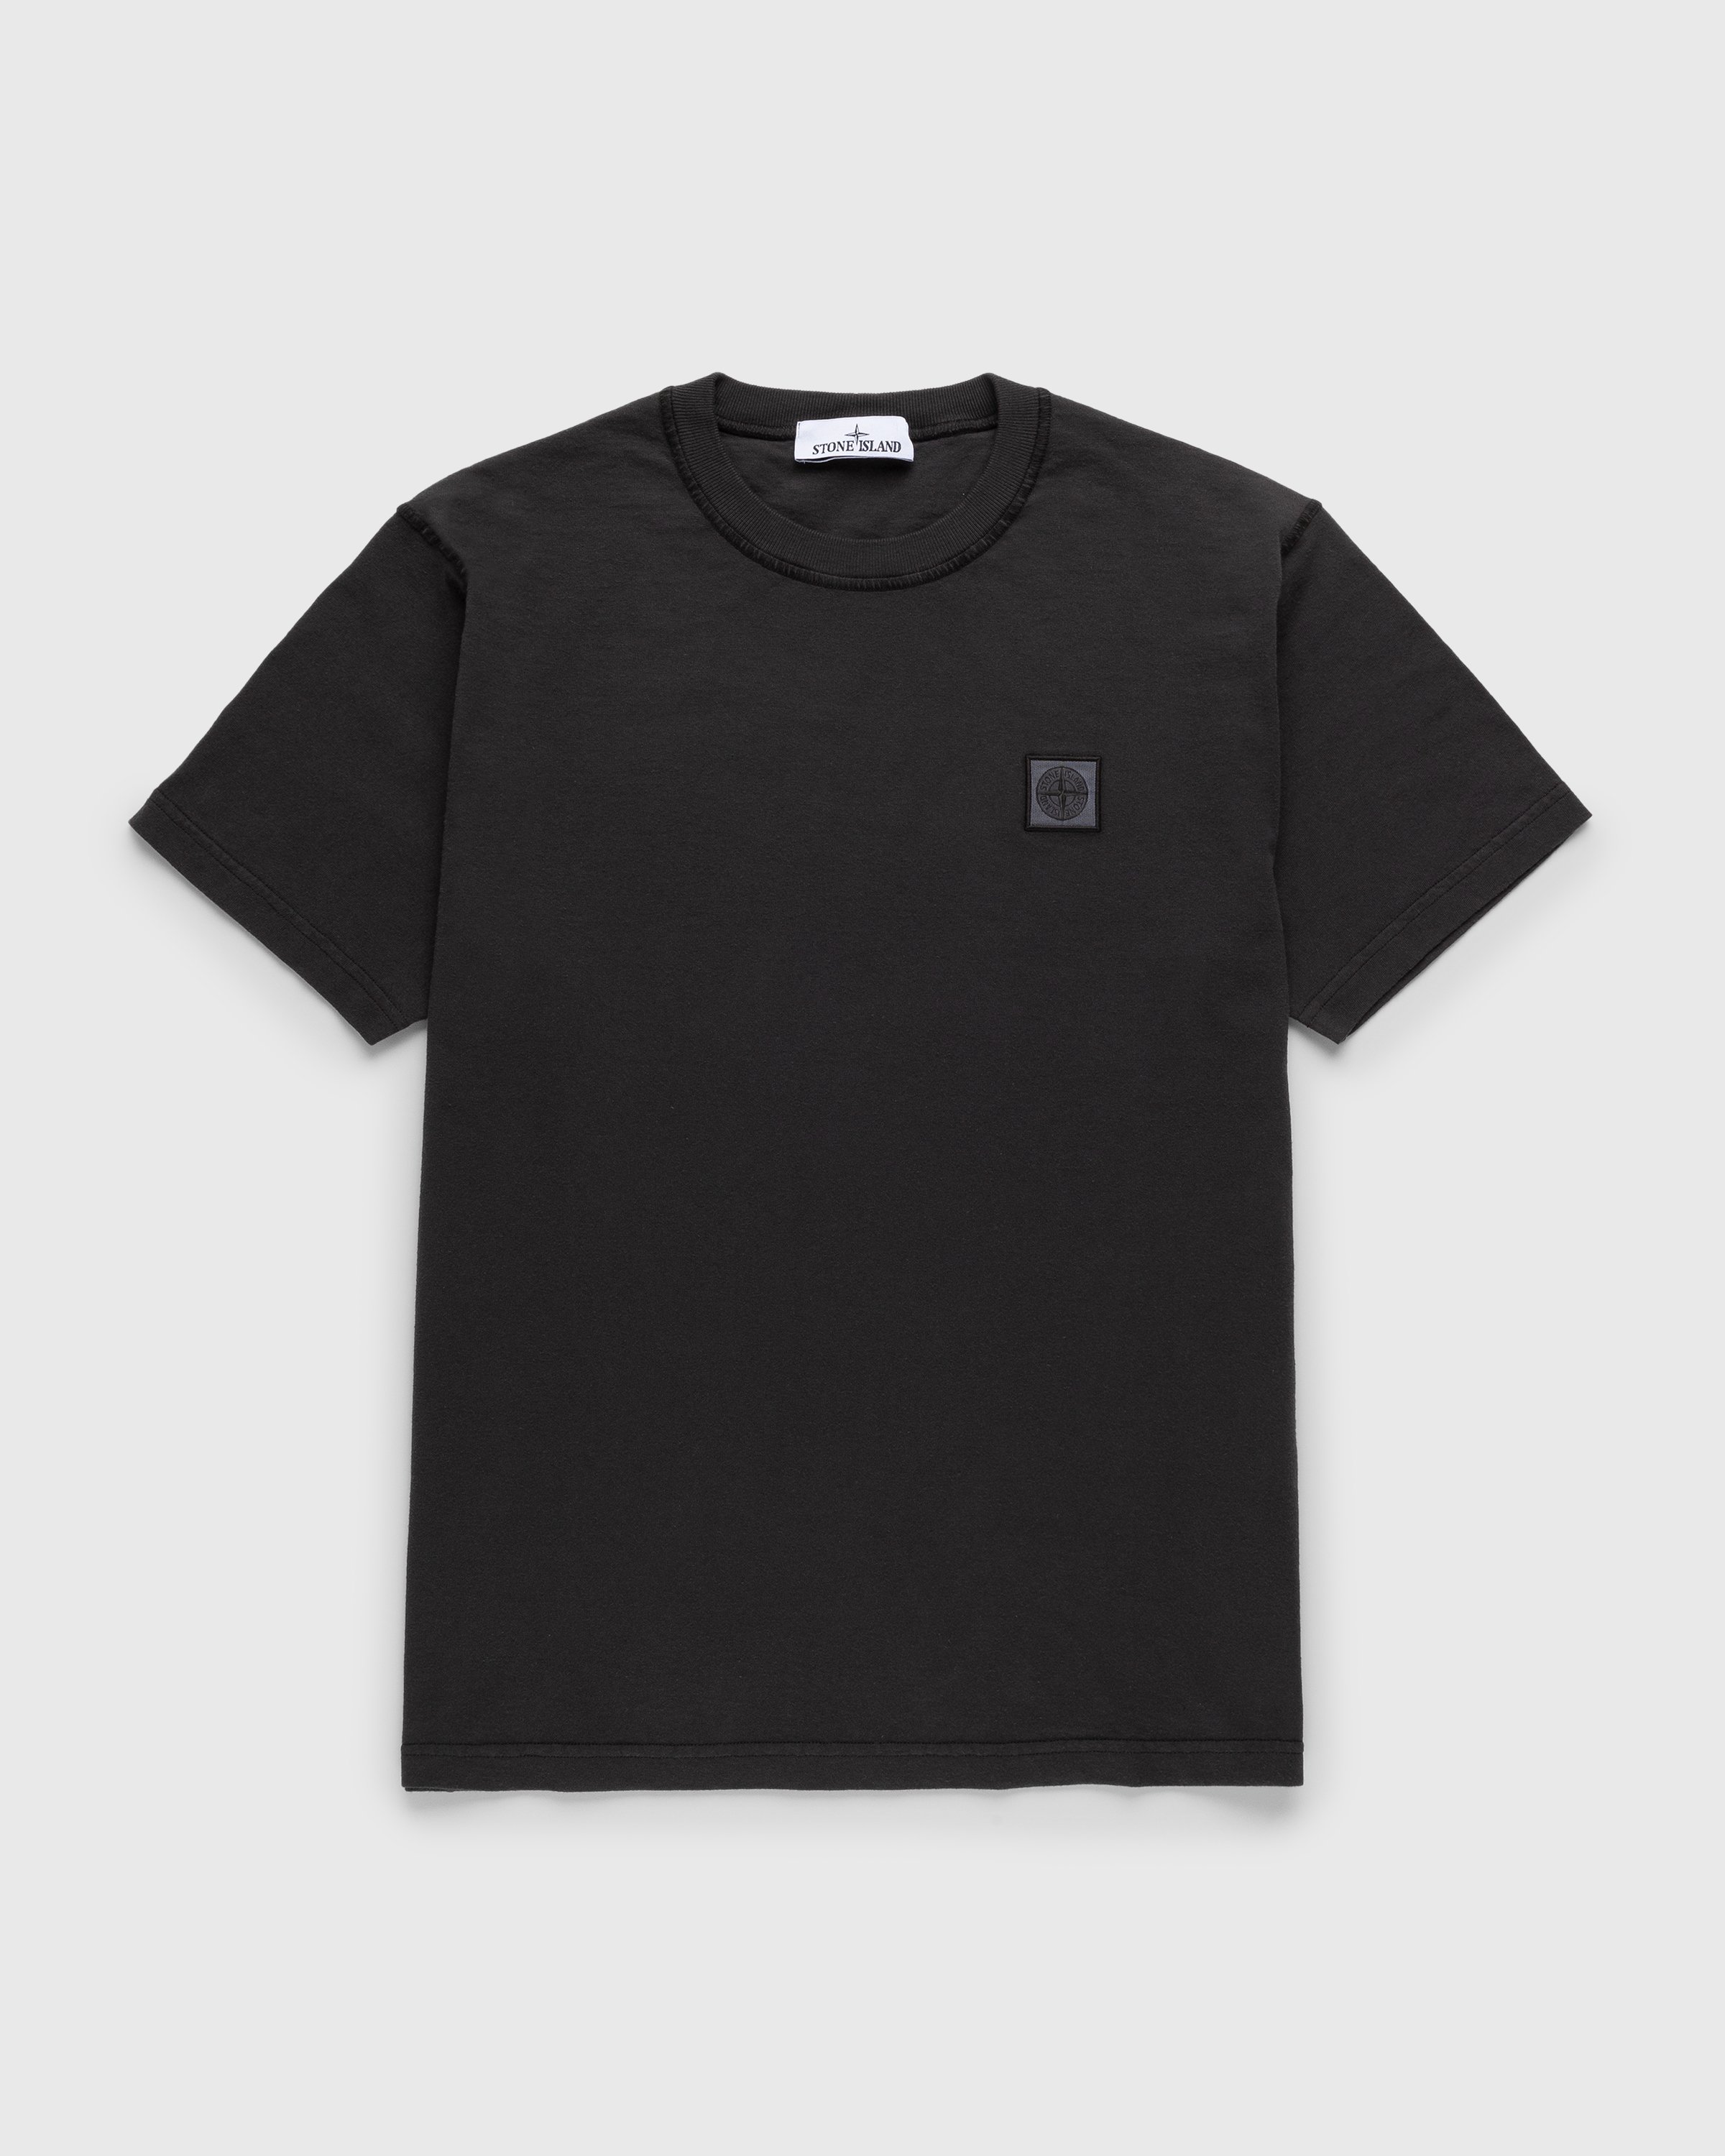 Stone Island - Fissato T-Shirt Charcoal - Clothing - Beige - Image 1